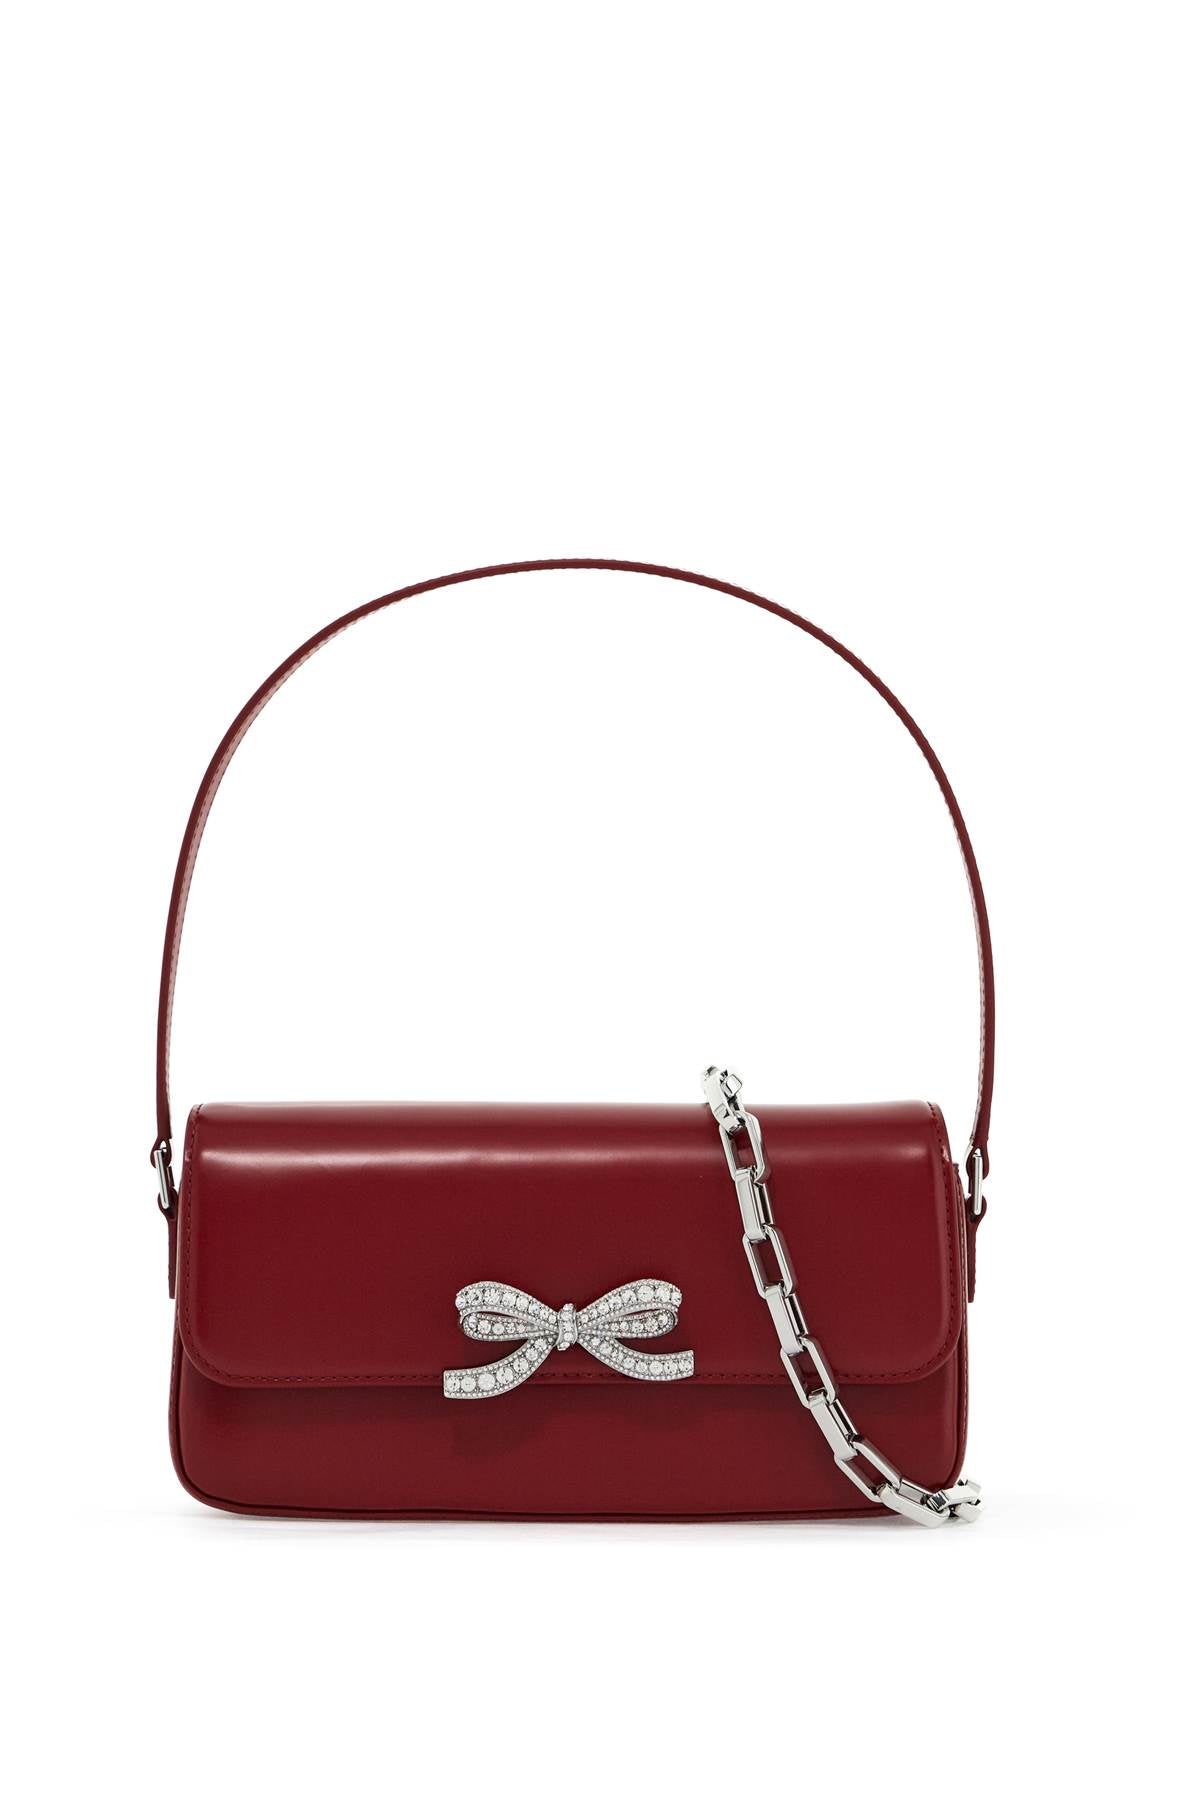 Self Portrait smooth leather baguette handbag - Red